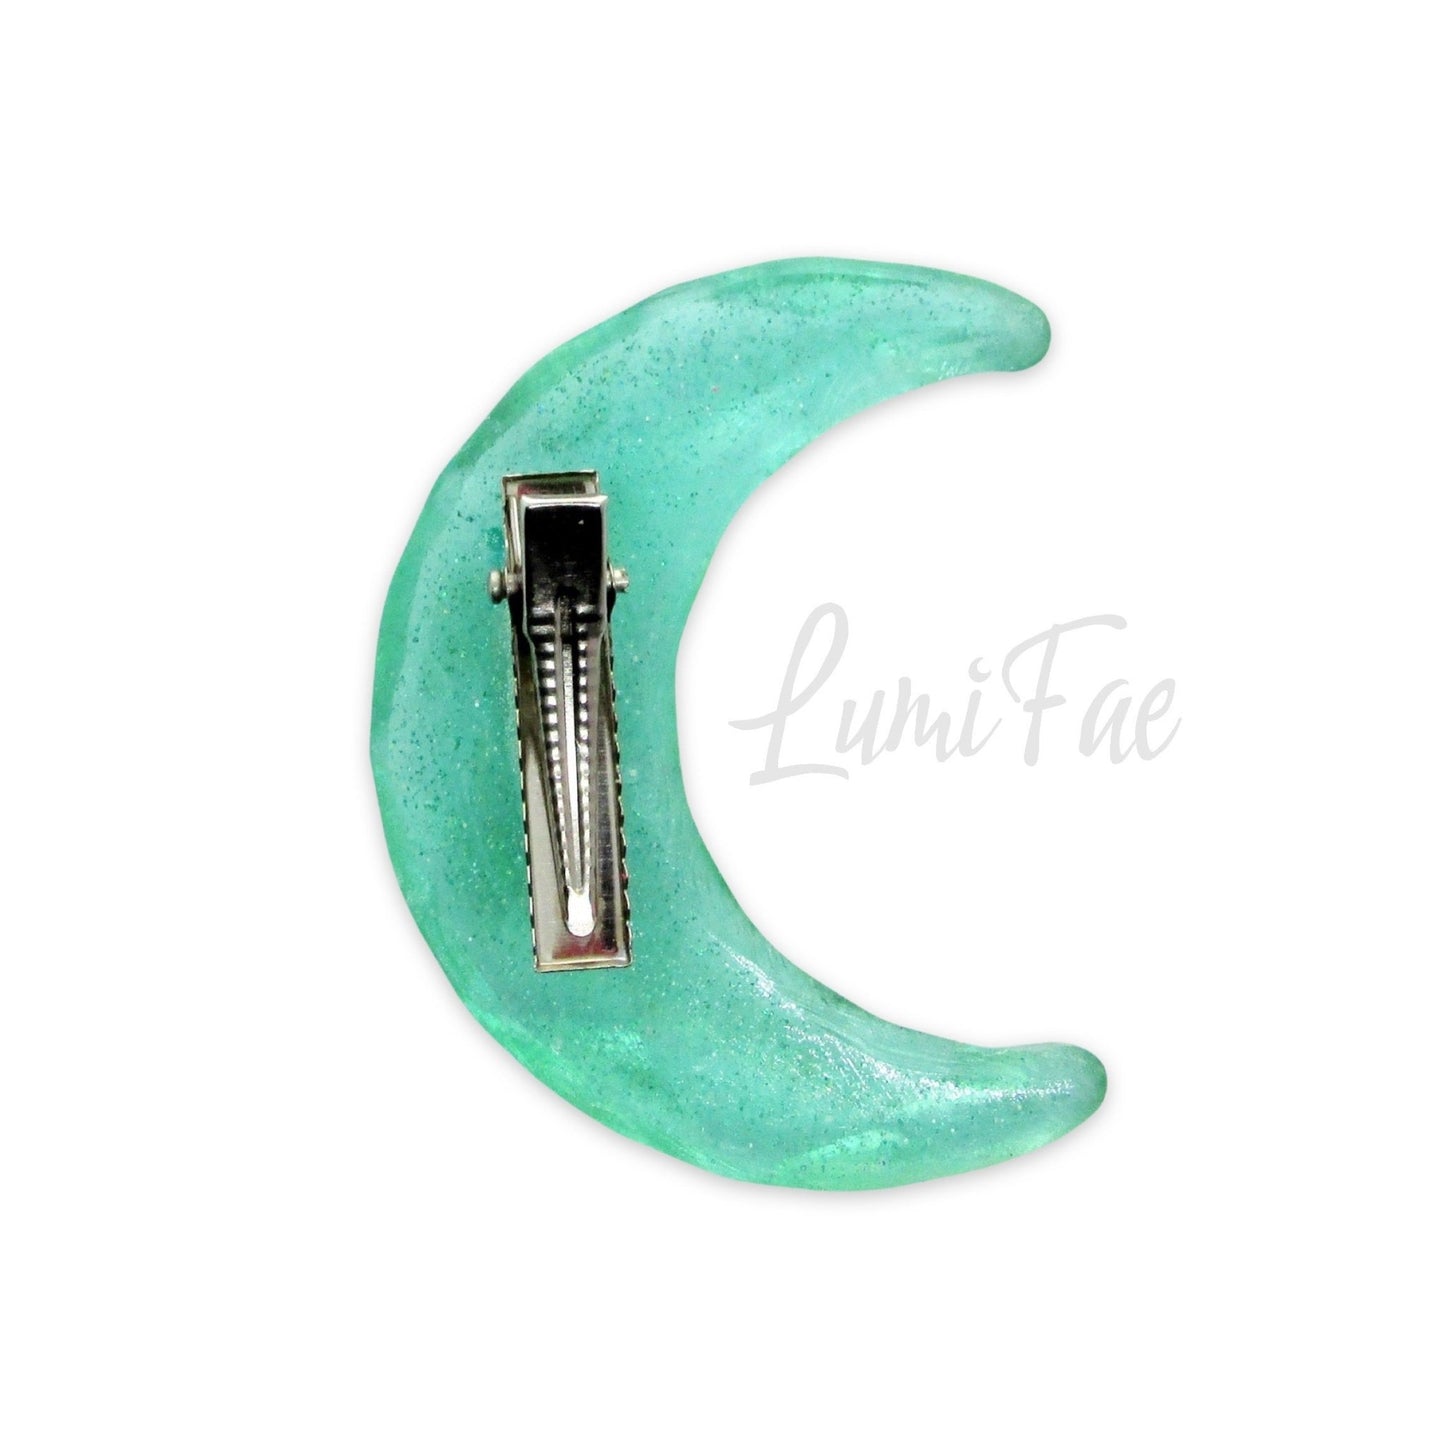 Aqua Blue Sparkly Translucent Moon Hair clip, 2.5” - LumiFae